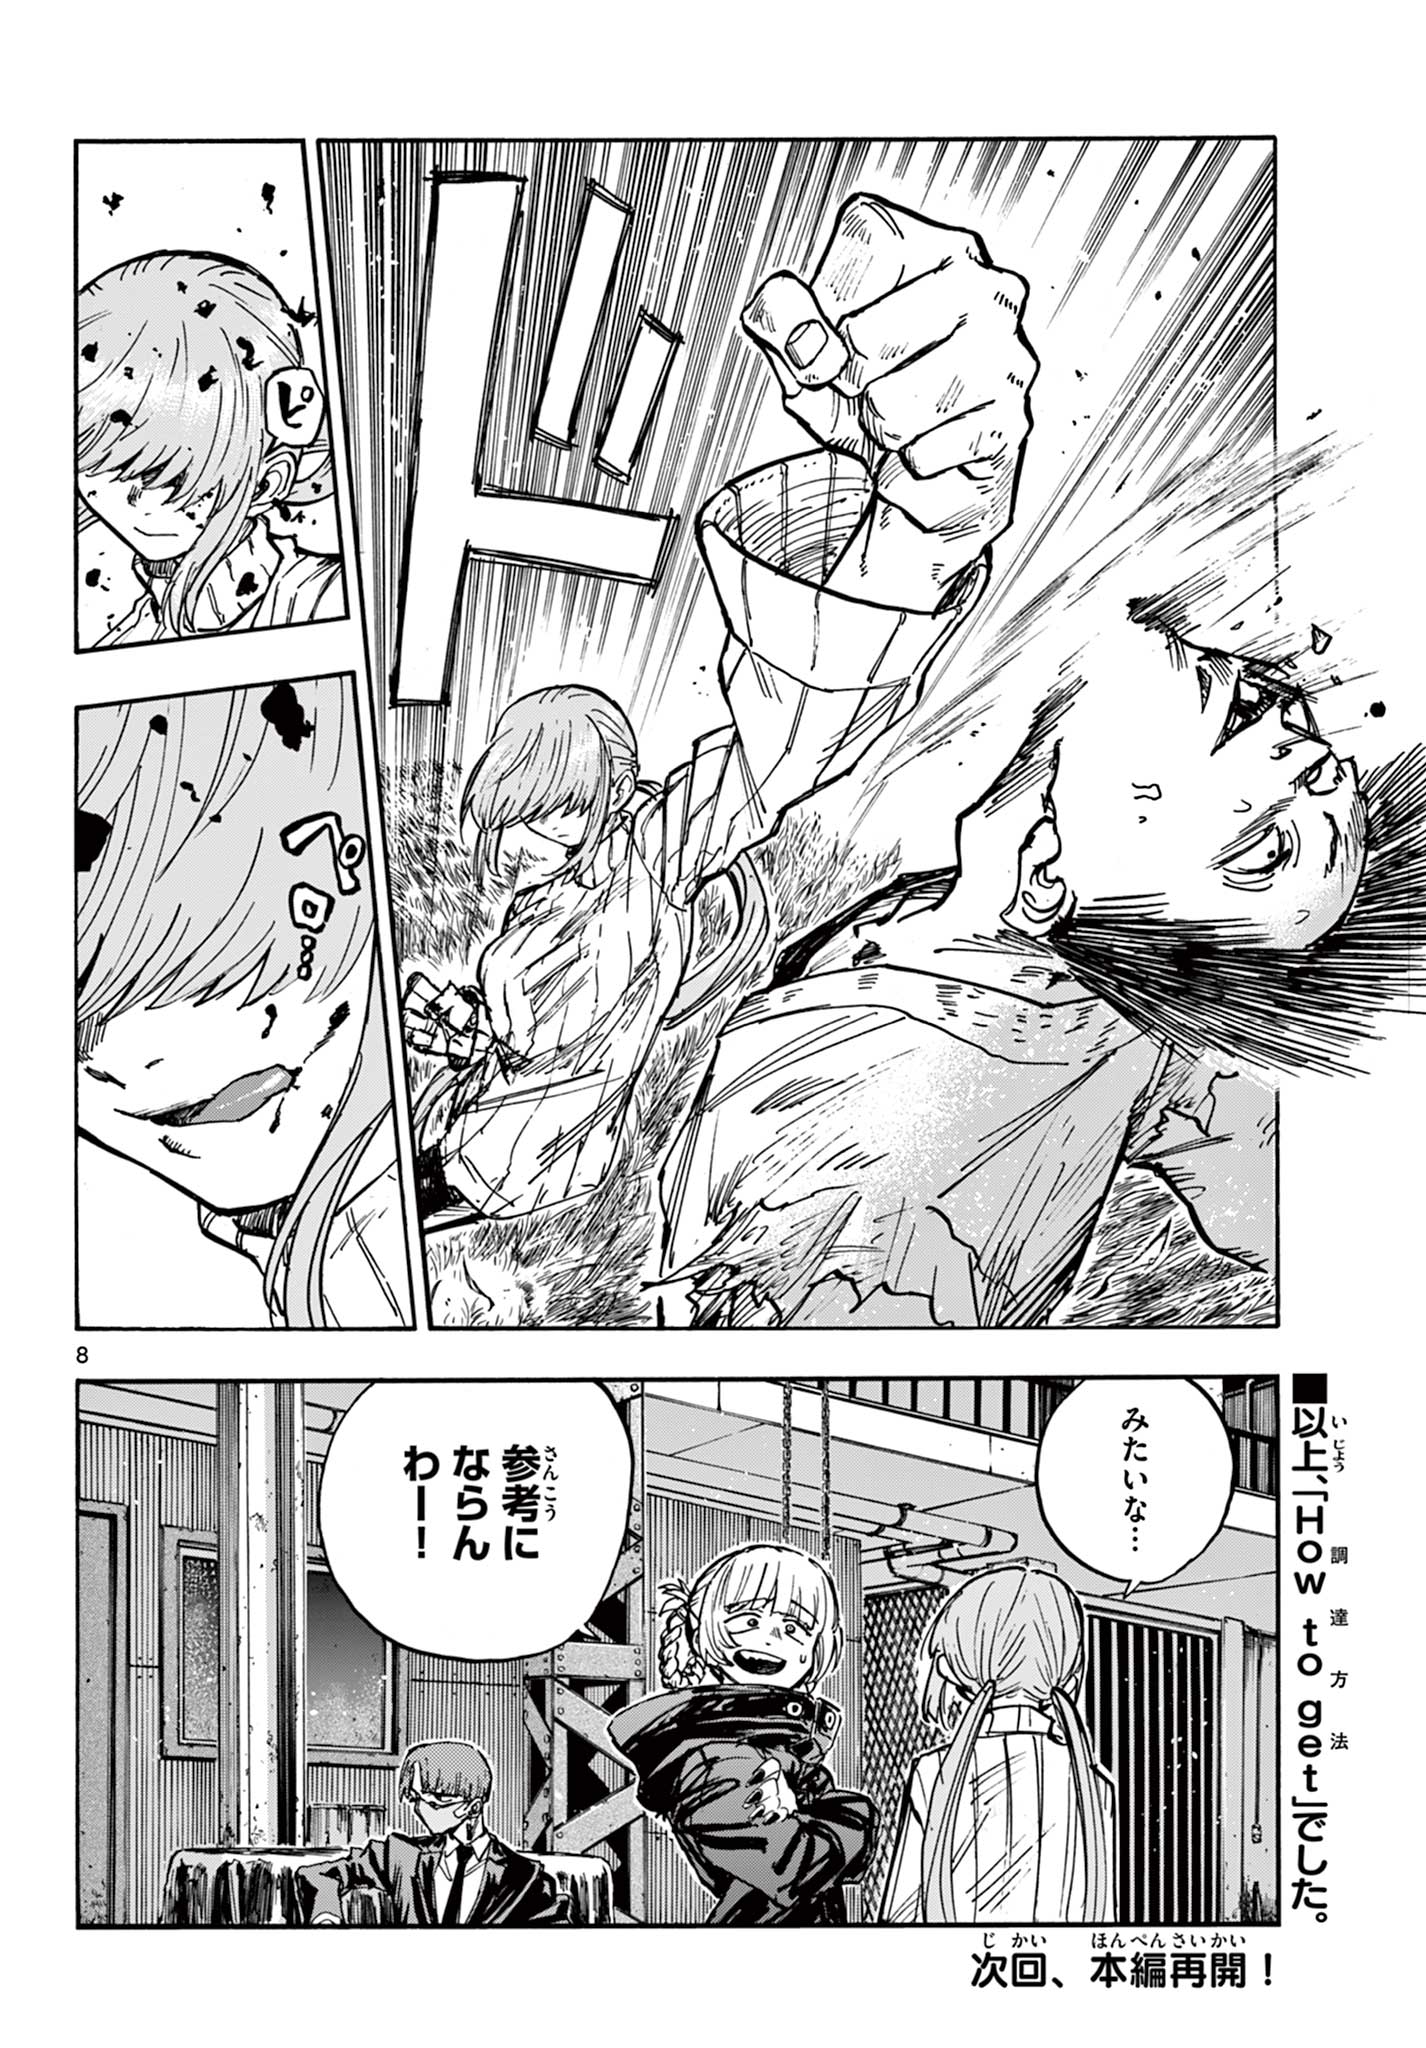 Yofukashi no Uta - Chapter 182.5 - Page 8